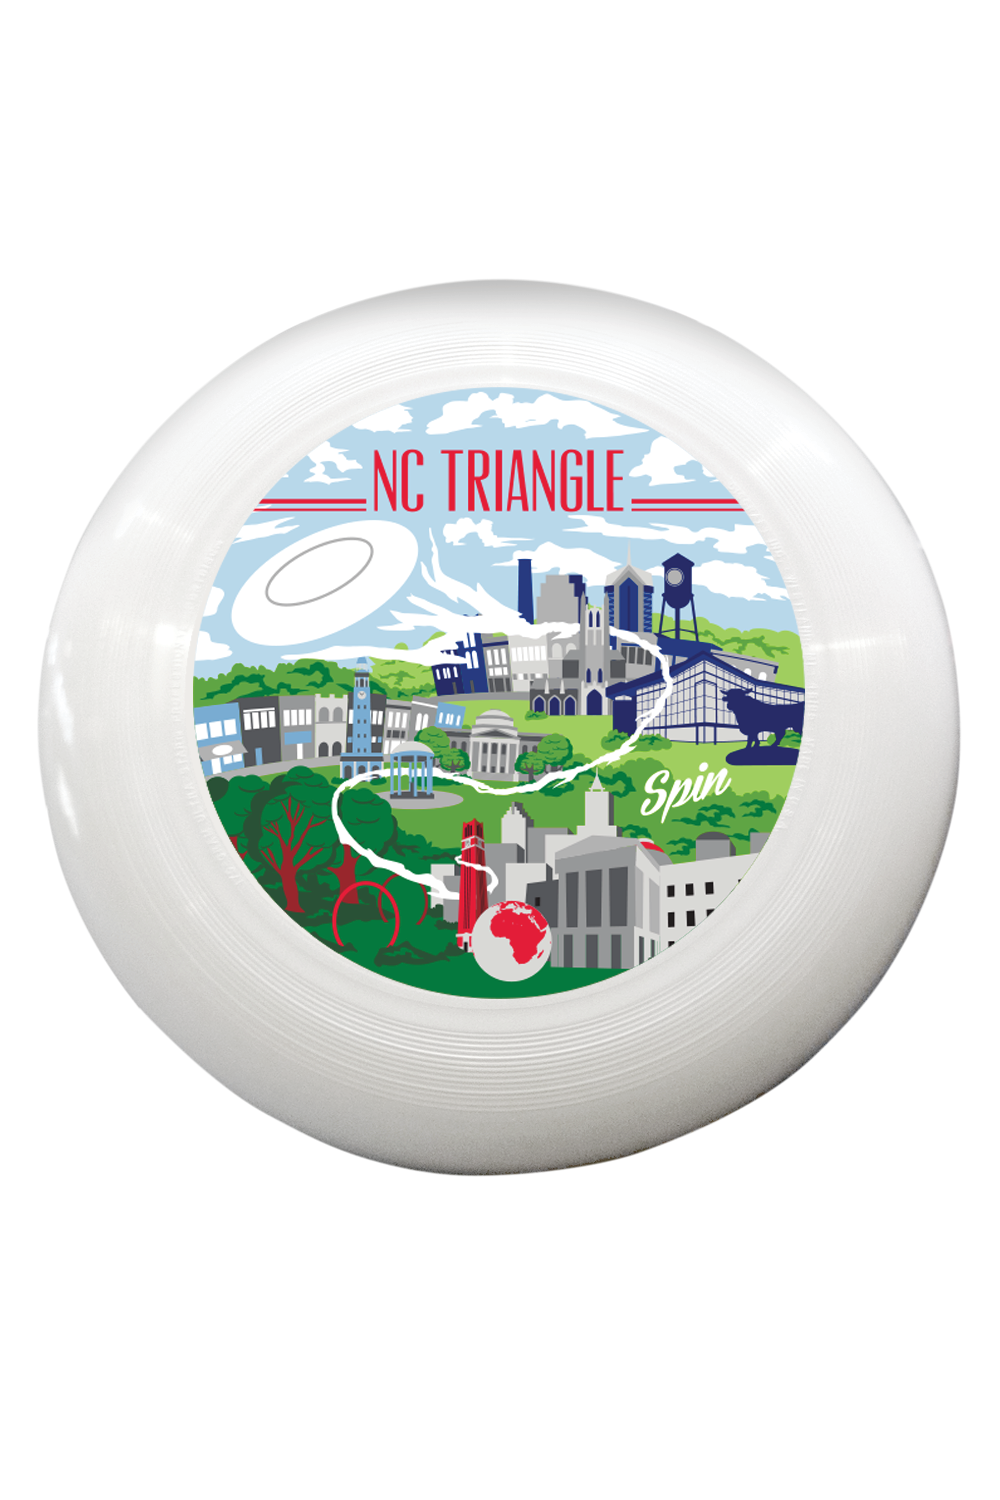 NC Triangle Disc